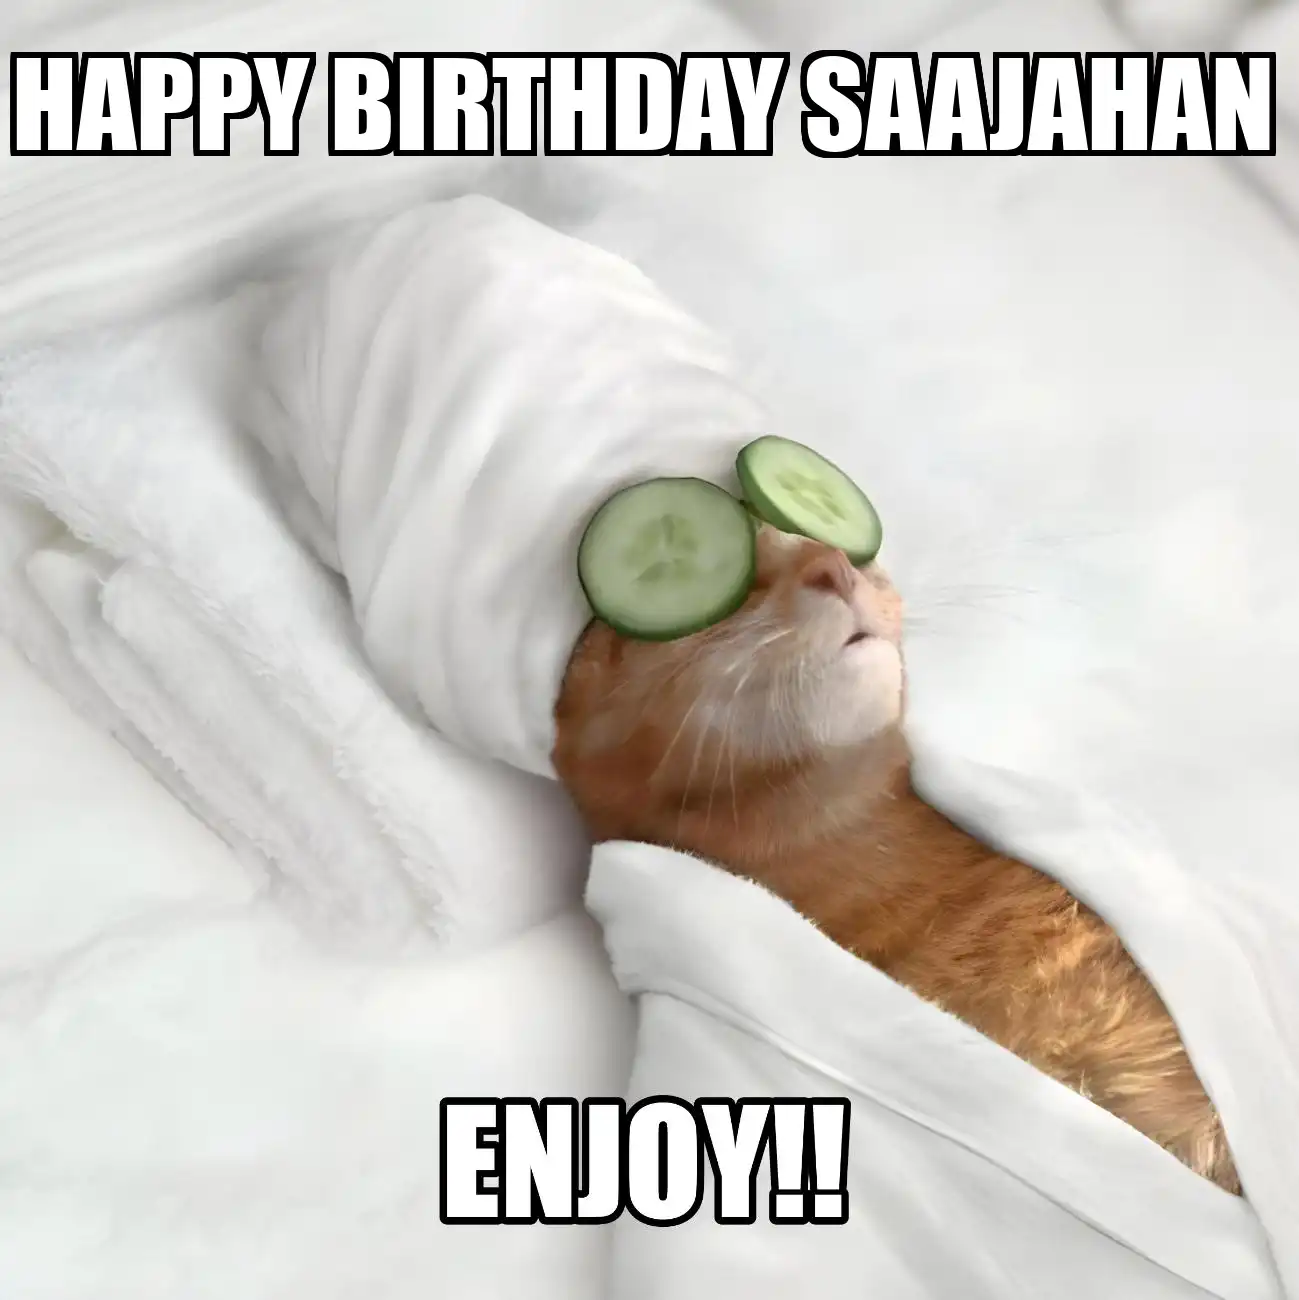 Happy Birthday Saajahan Enjoy Cat Meme